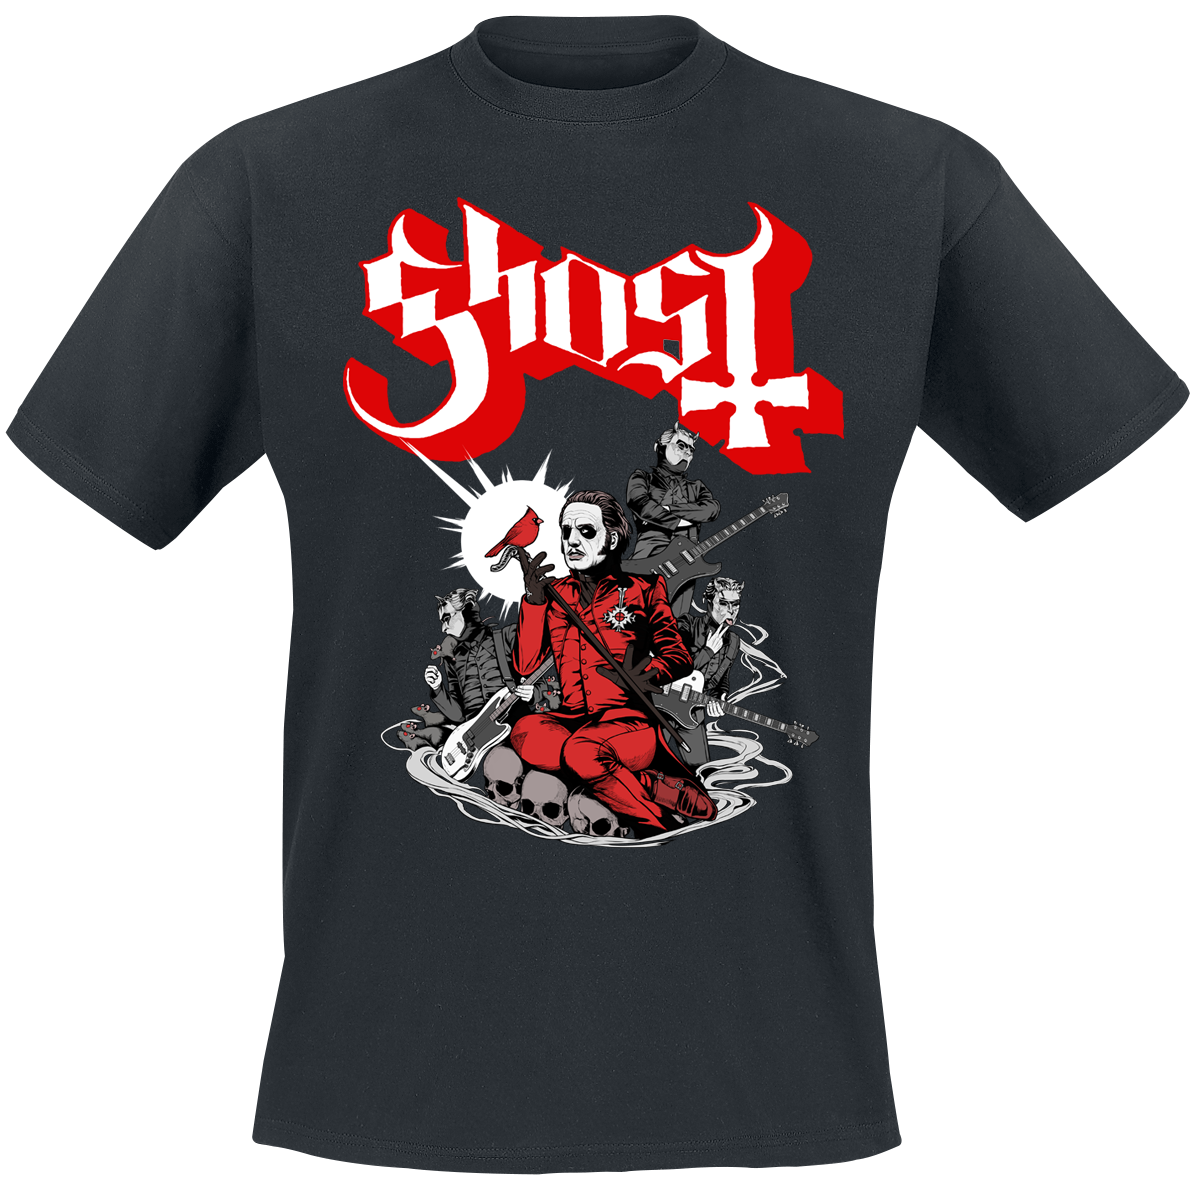 Ghost - Cardinale - T-Shirt - schwarz